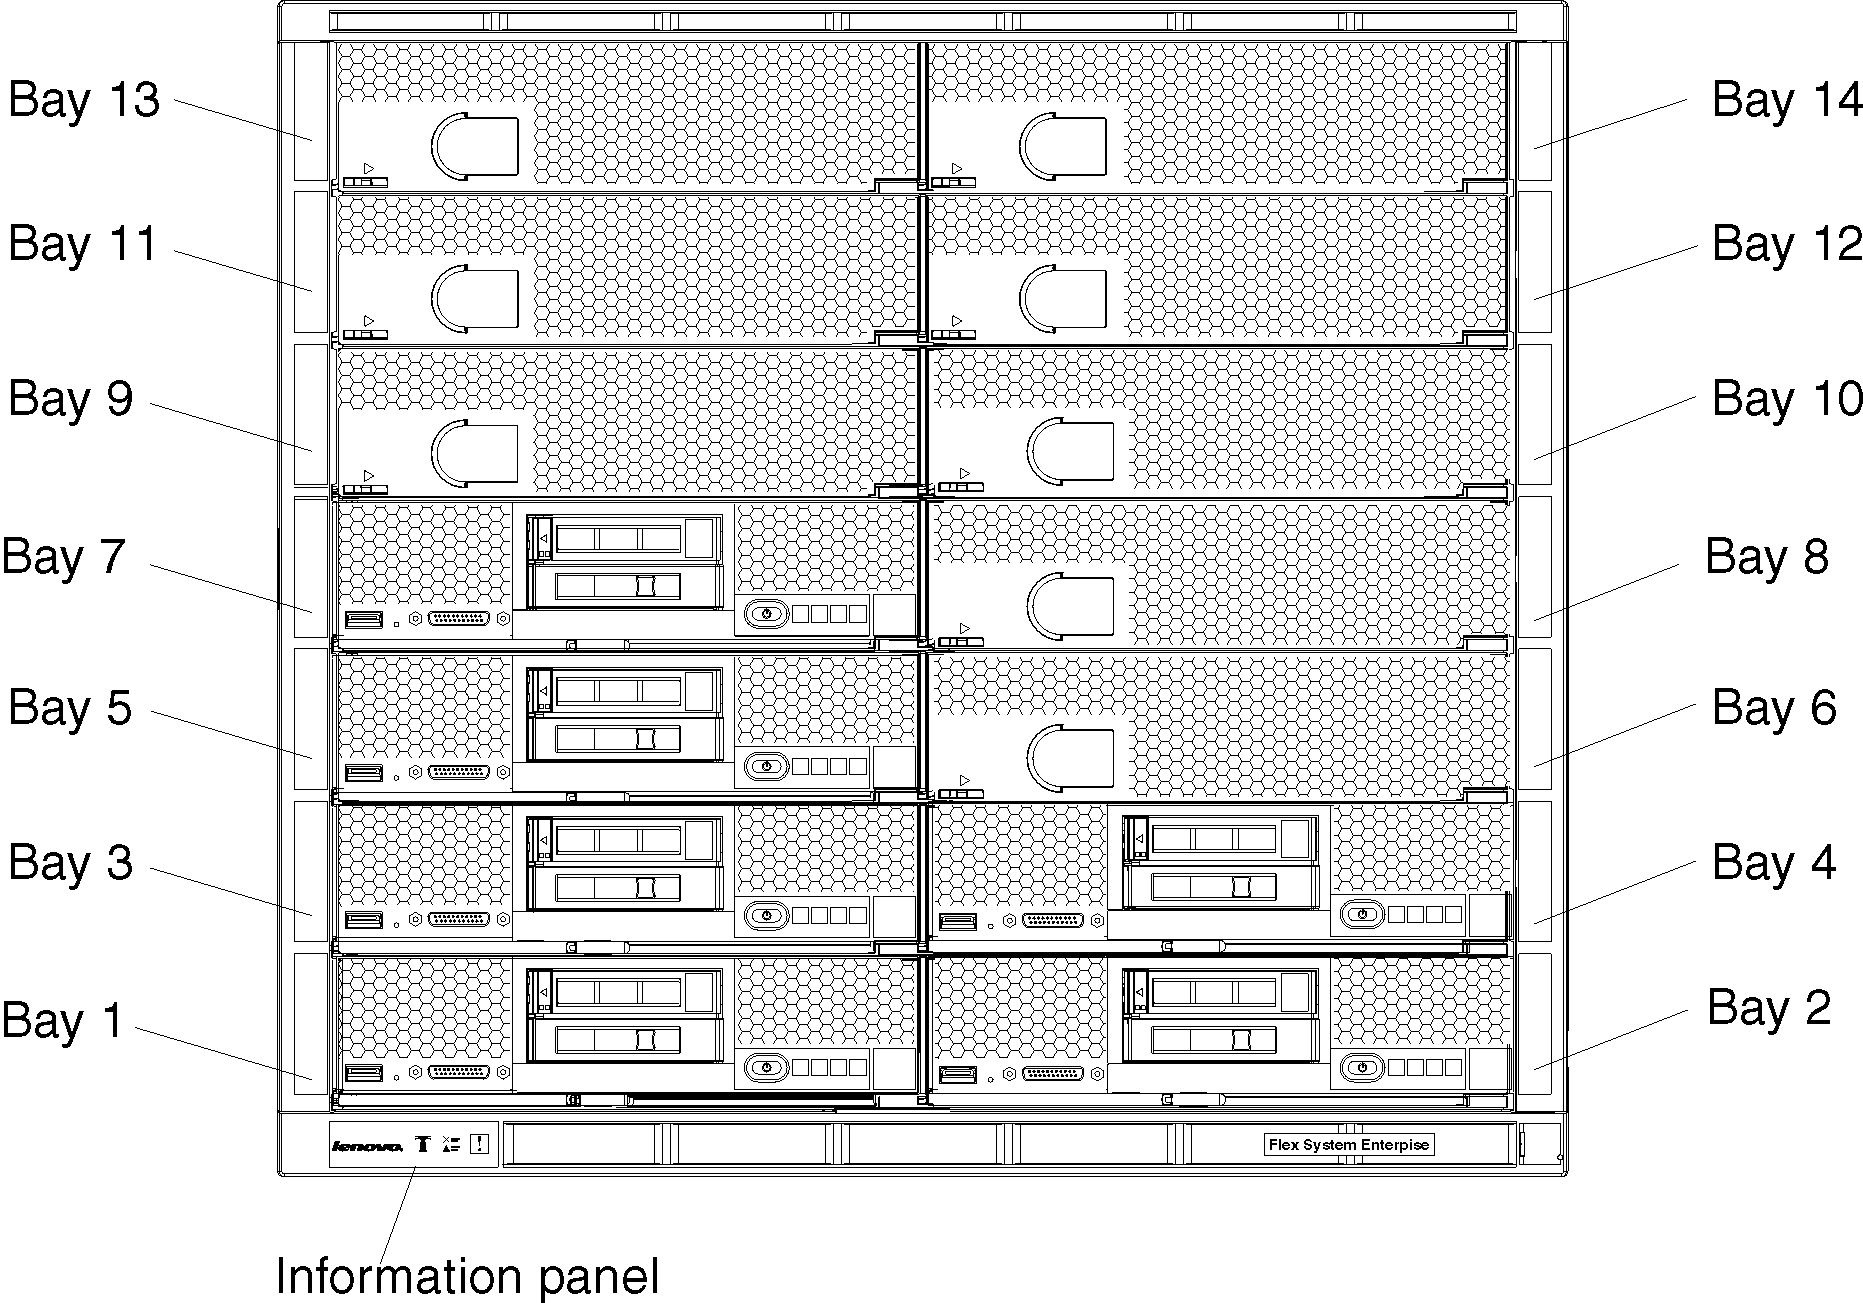 illustration of the Flex System Enterprise Chassis